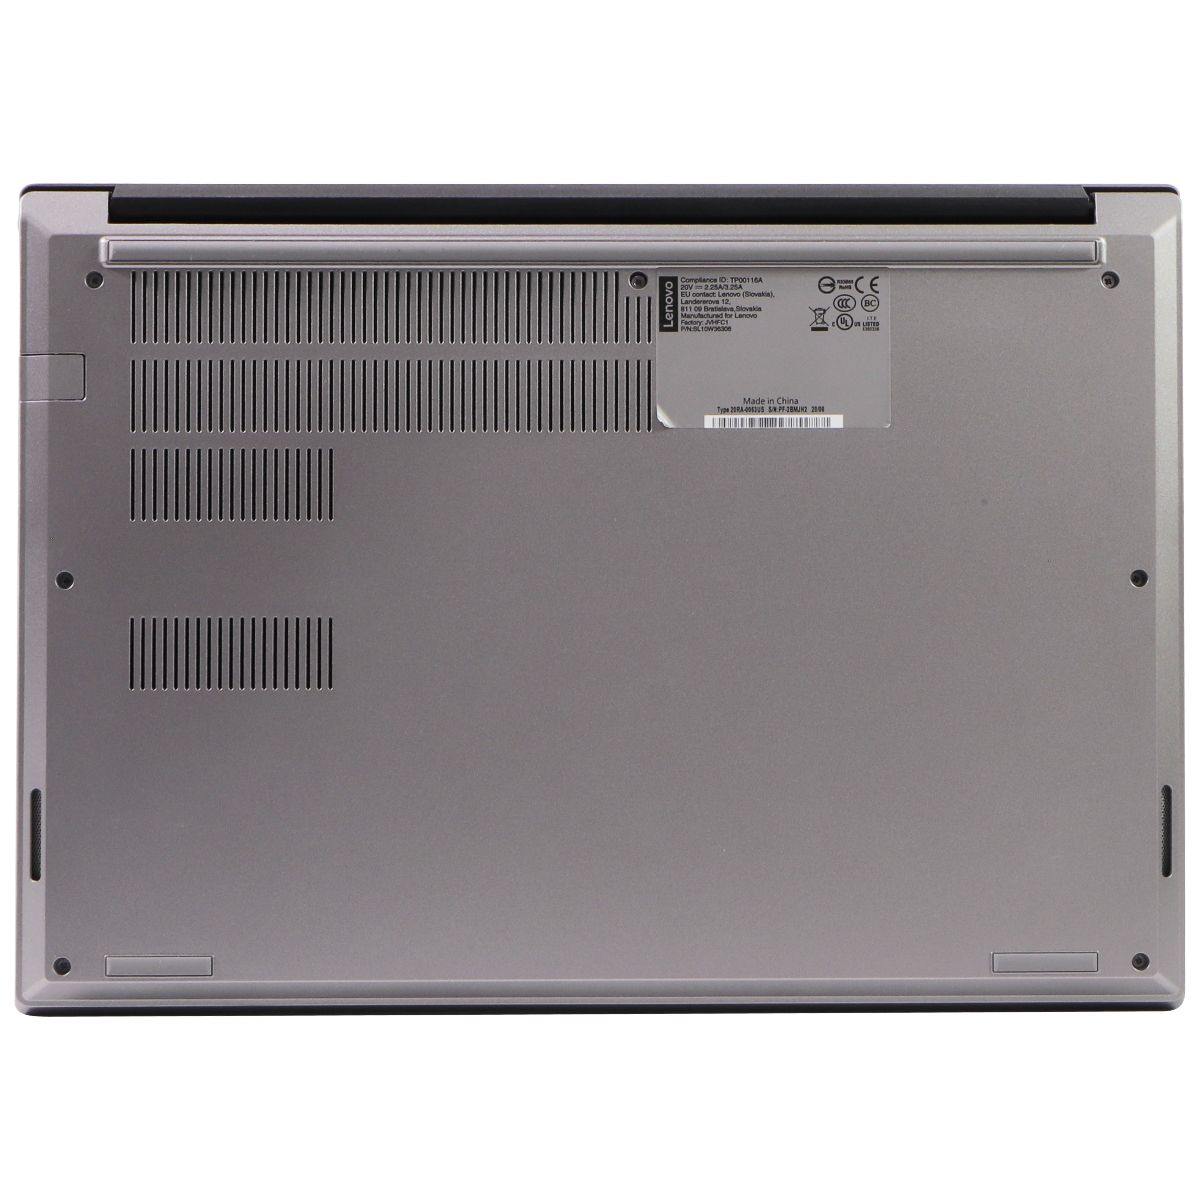 Lenovo ThinkPad E14 (14-in) FHD Laptop (20RA) i7-10510U/256GB SSD/8GB/10 Home Laptops - PC Laptops & Netbooks Lenovo    - Simple Cell Bulk Wholesale Pricing - USA Seller